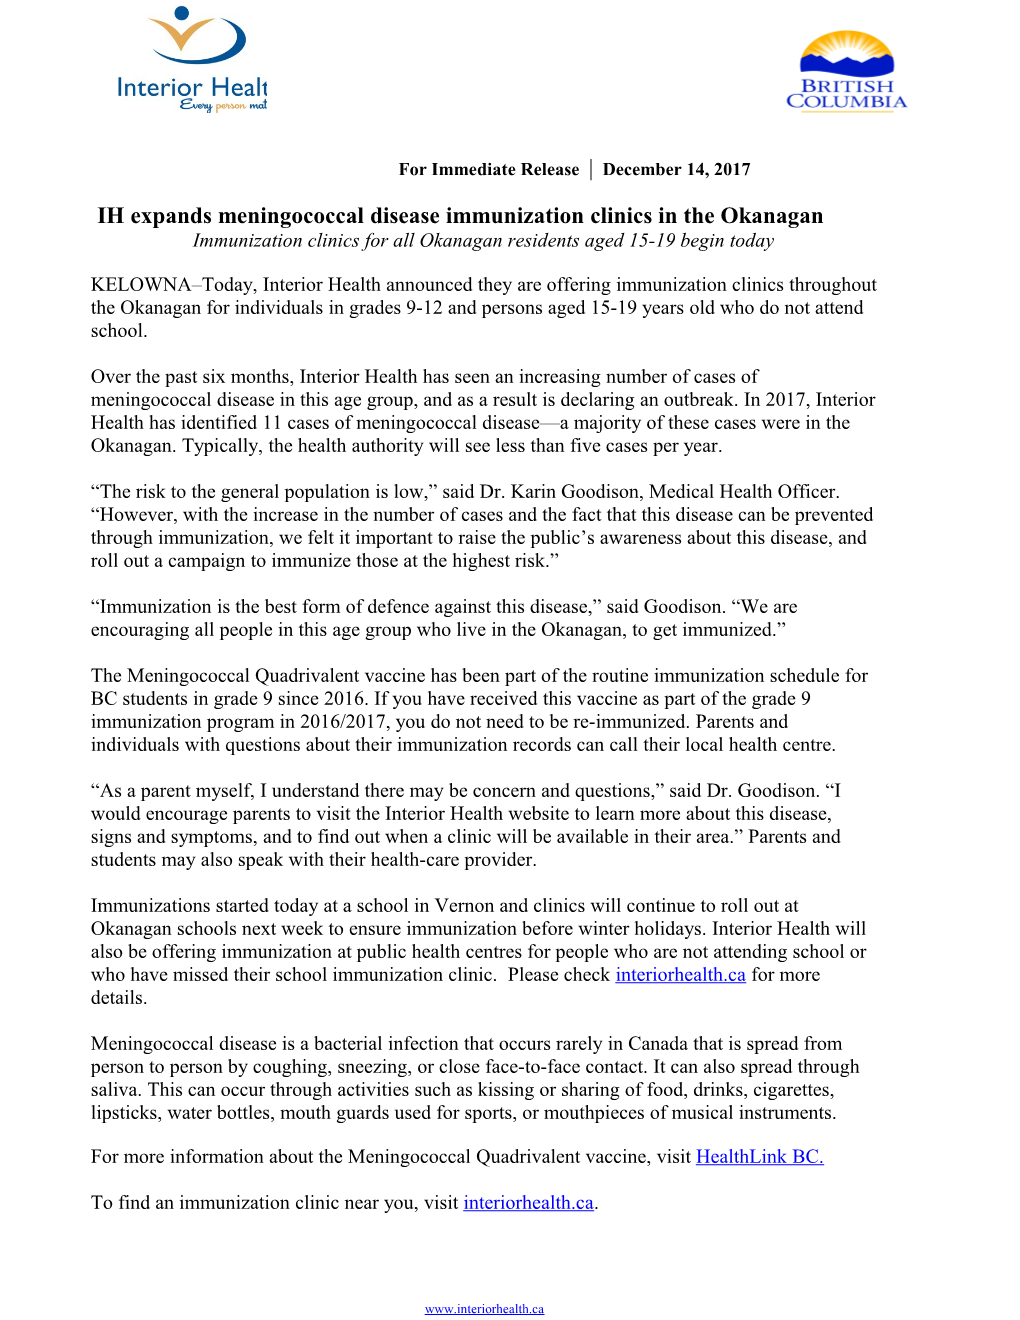 IH Expands Meningococcal Disease Immunization Clinics in the Okanagan